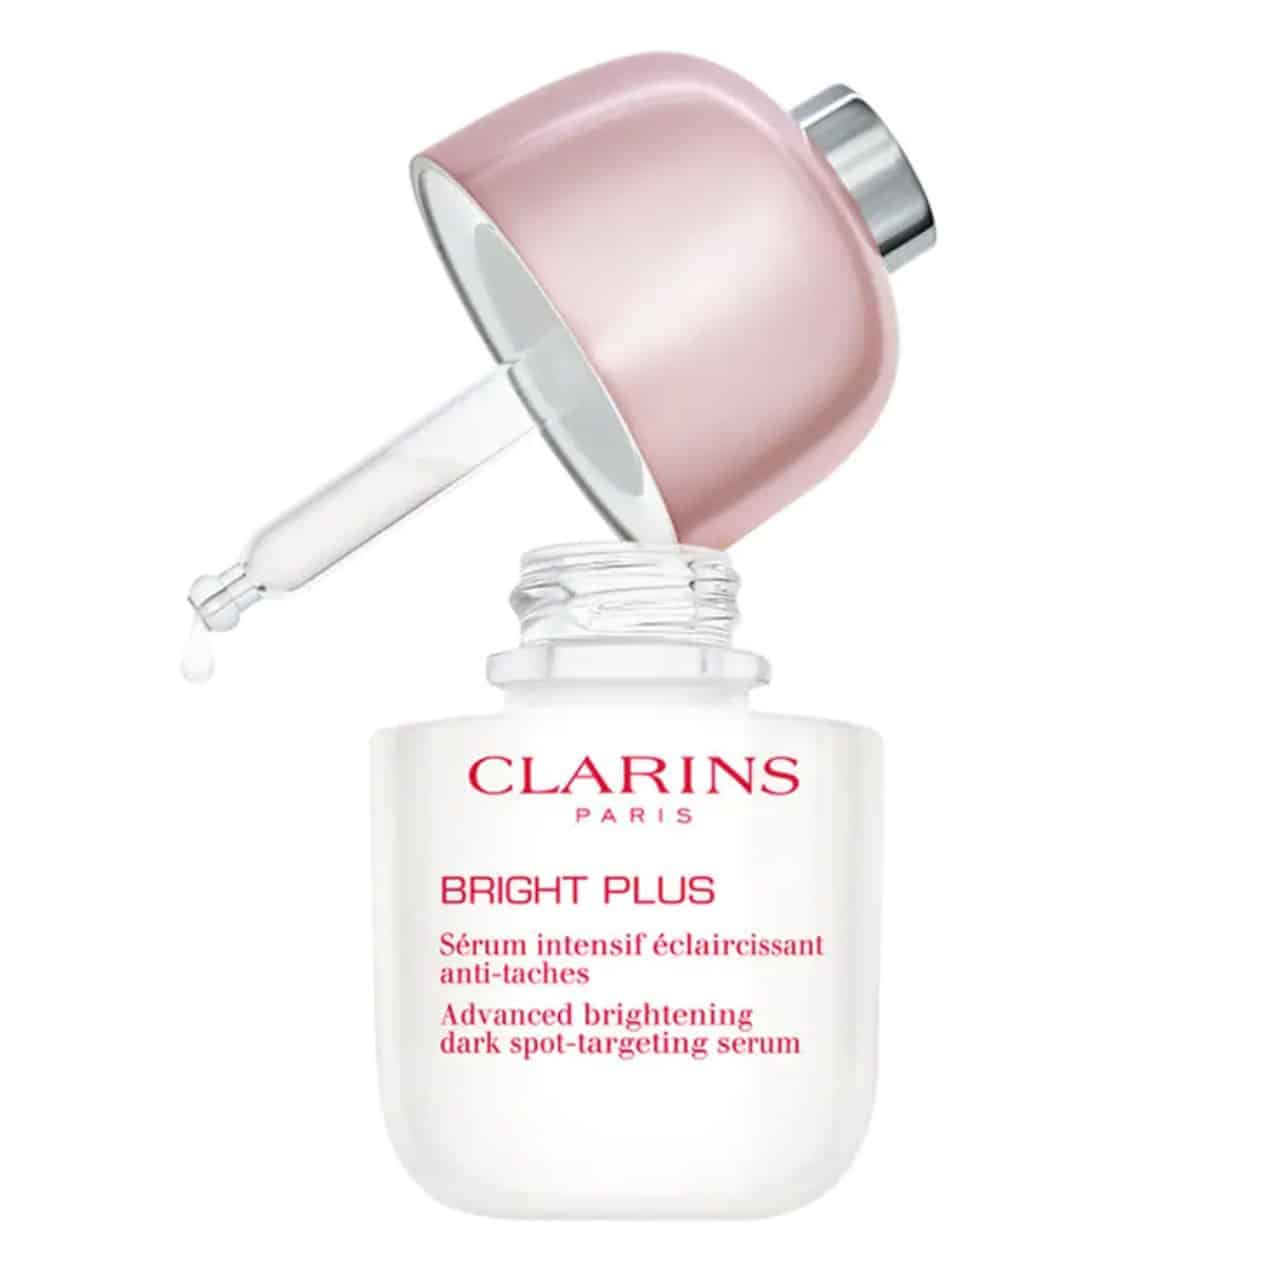 Bright Plus Advanced dark spot-targeting serum – Clarins